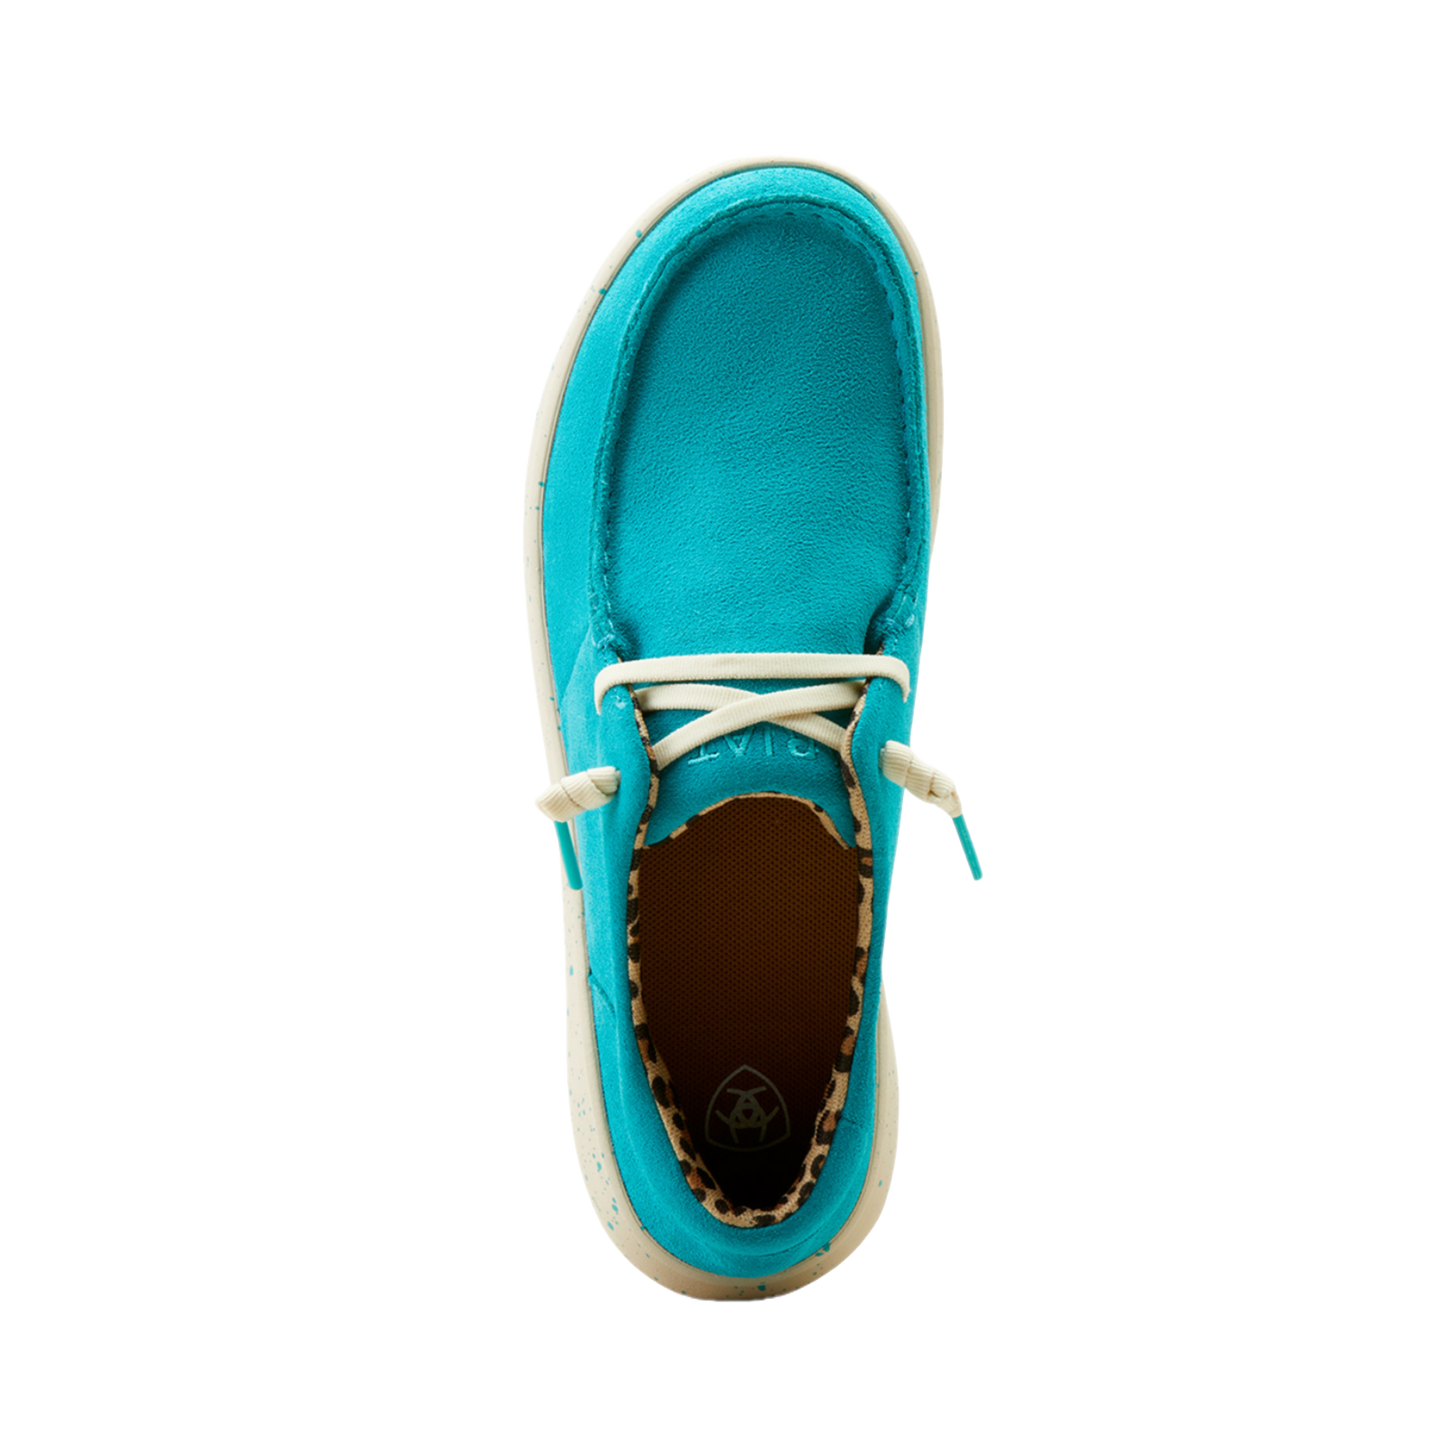 Ariat Ladies Hilo Brightest Turquoise Casual Shoes 10050971